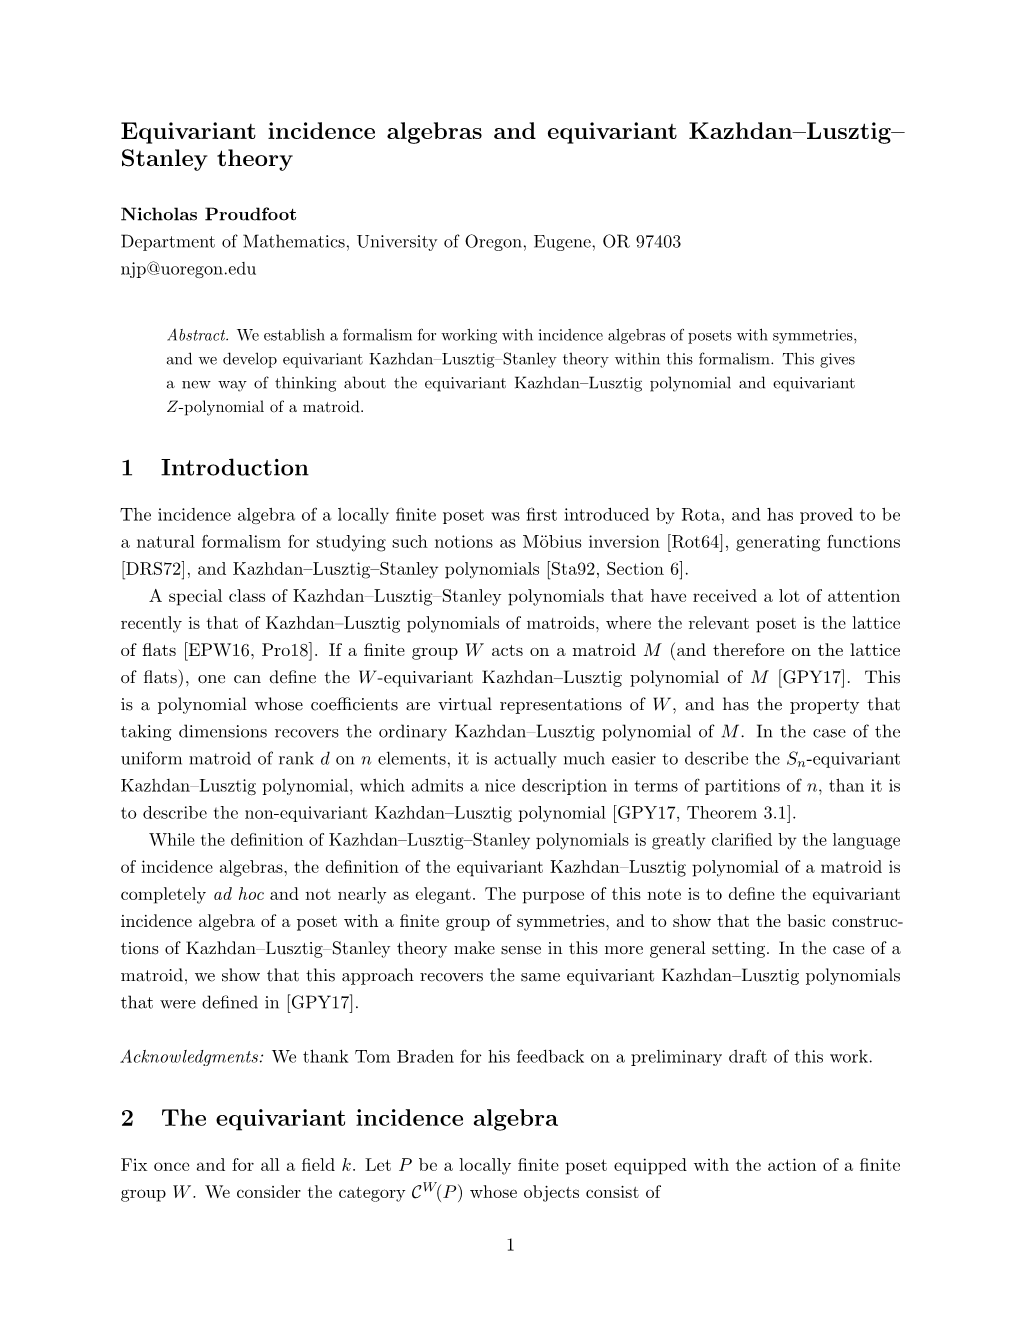 Equivariant Incidence Algebras and Equivariant Kazhdan–Lusztig– Stanley Theory